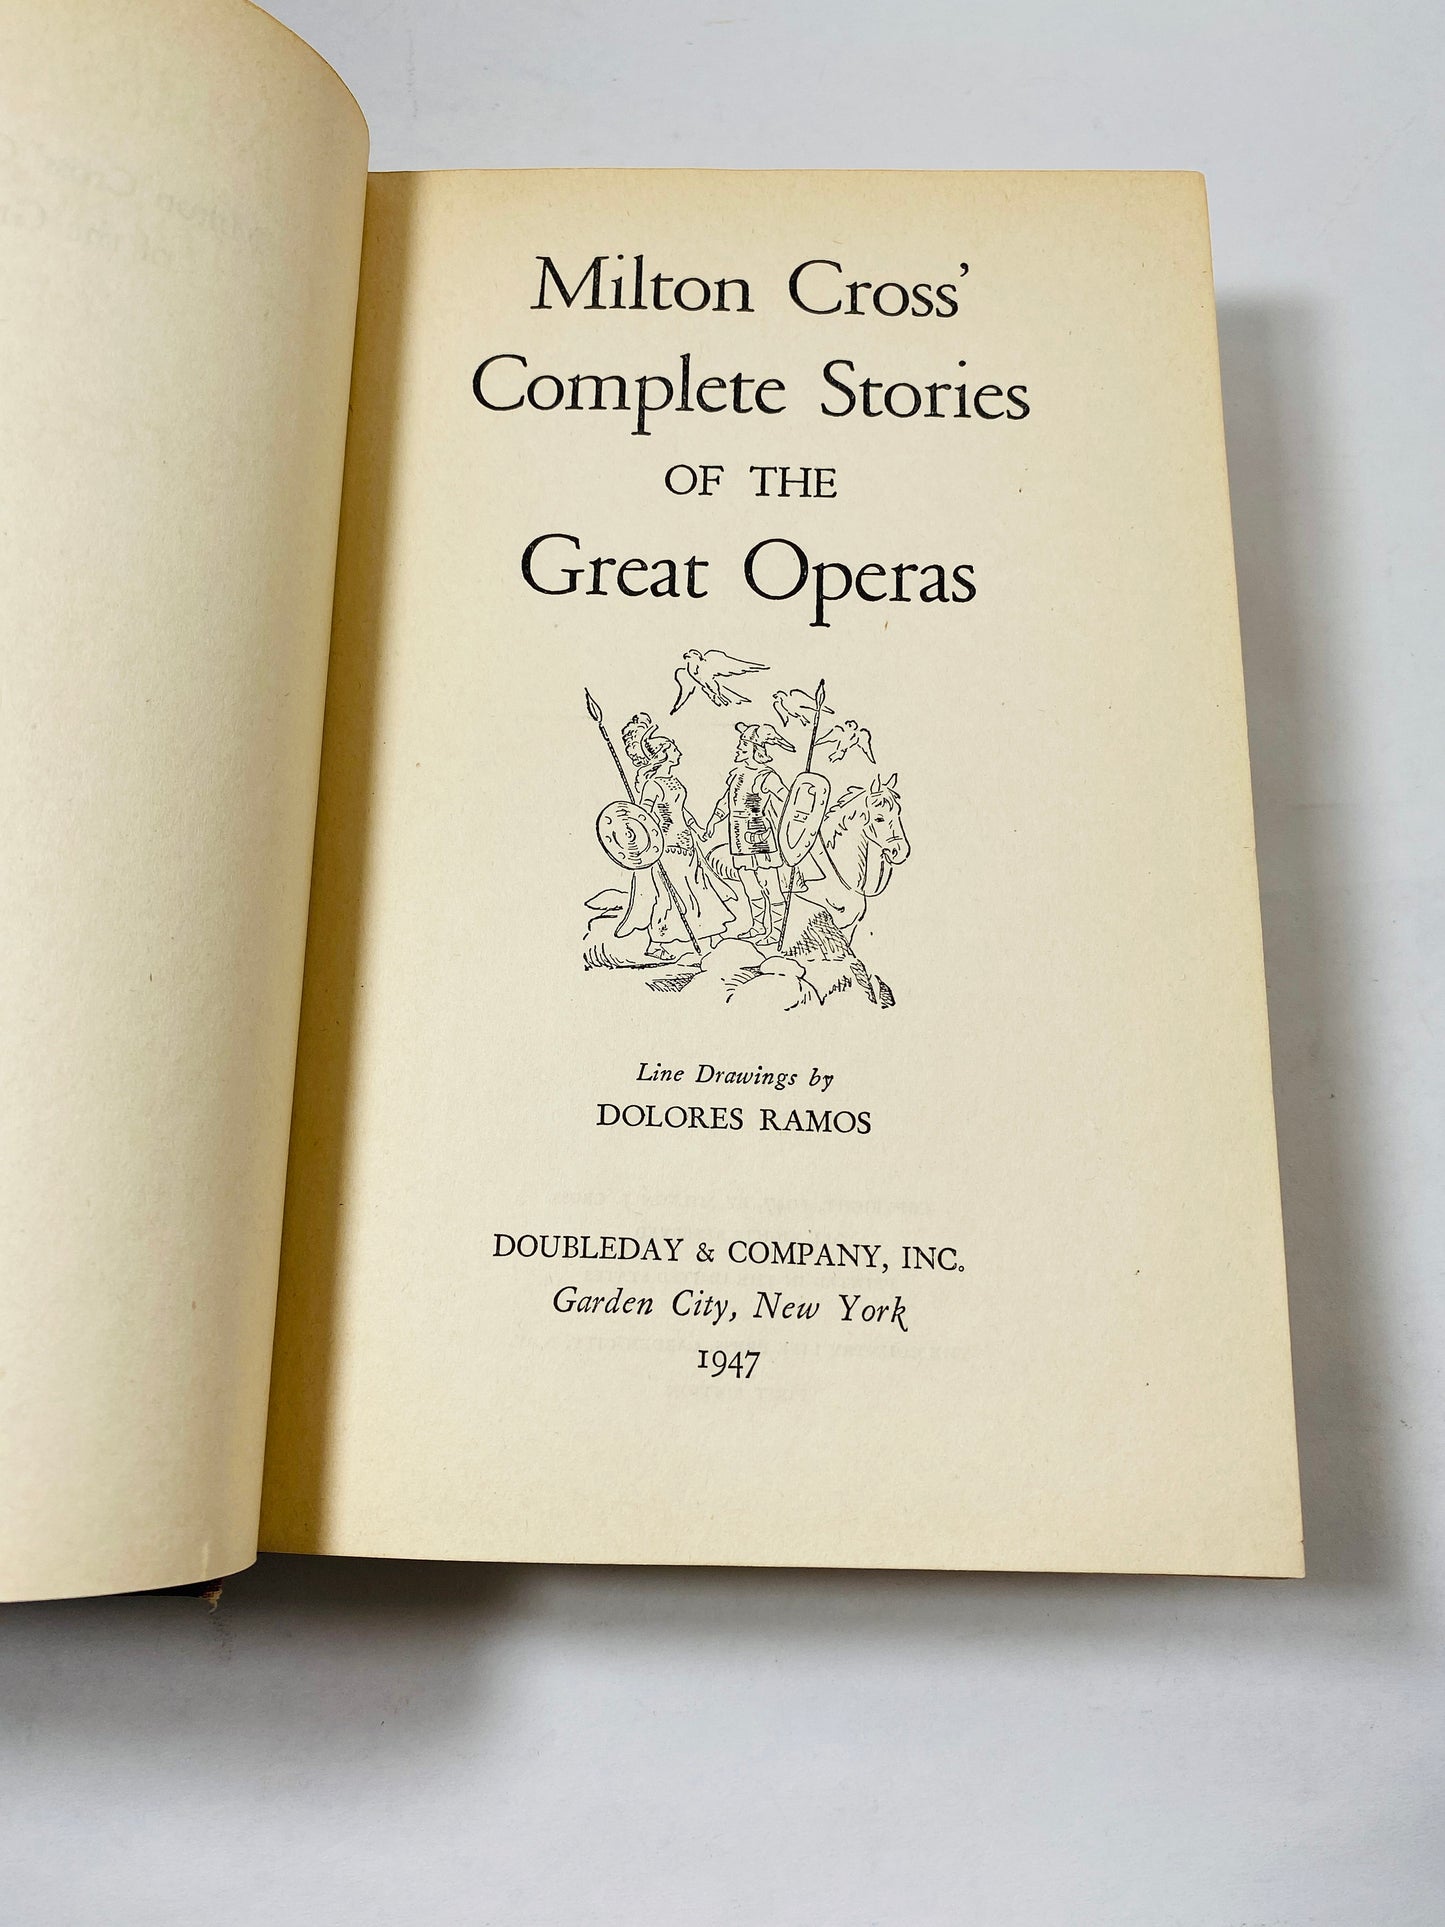 BEAUTIFUL Vintage World's Great Operas small book circa 1949 by John Tasker Howard Miniature La Boheme, Carmen, Arabella, Barber of Seville